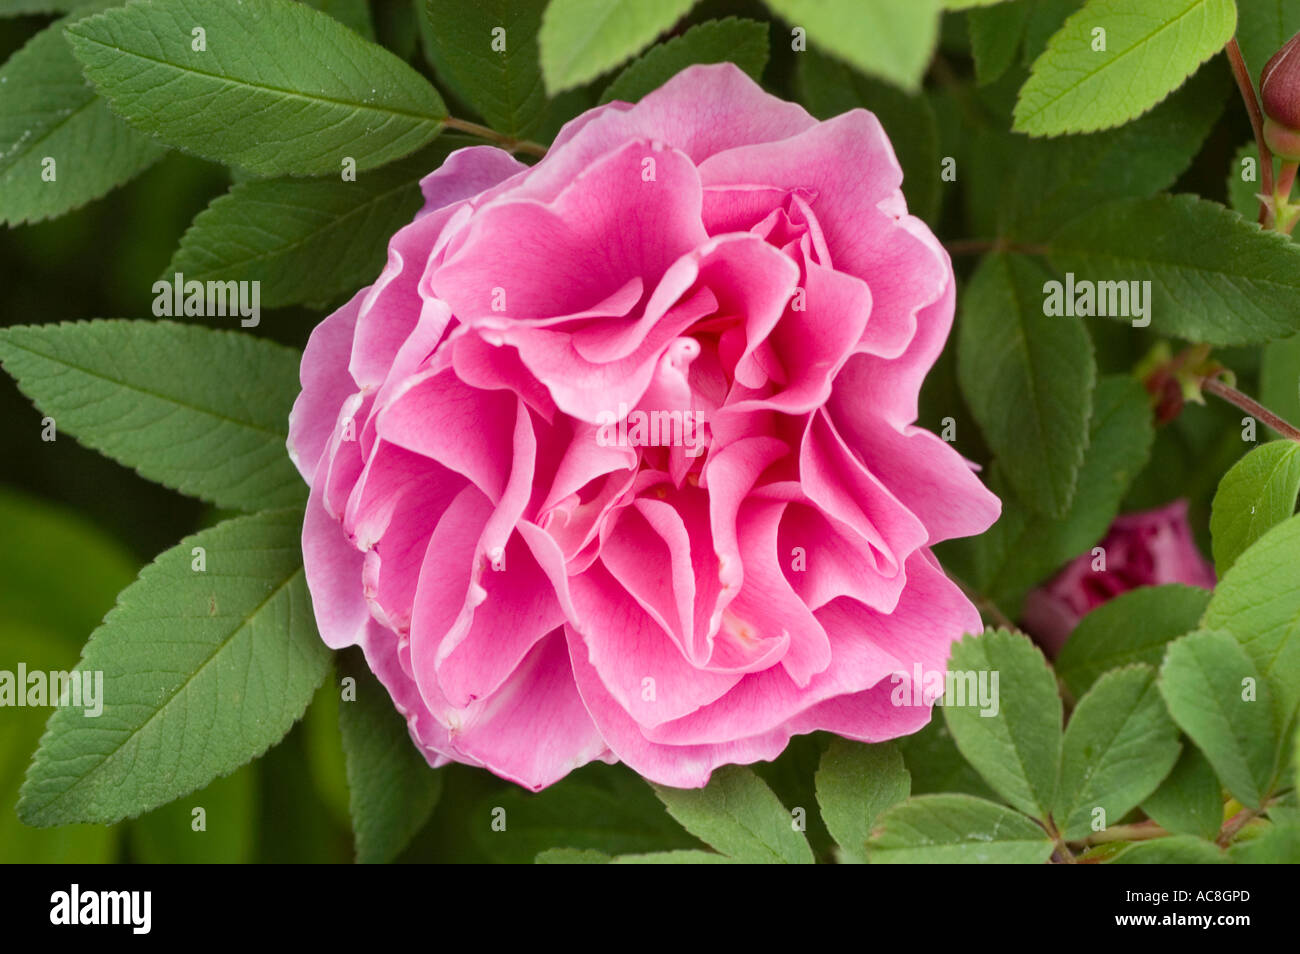 Pink rose close up Rosa glauca Nova E2 vill Sweden XX century Stock Photo